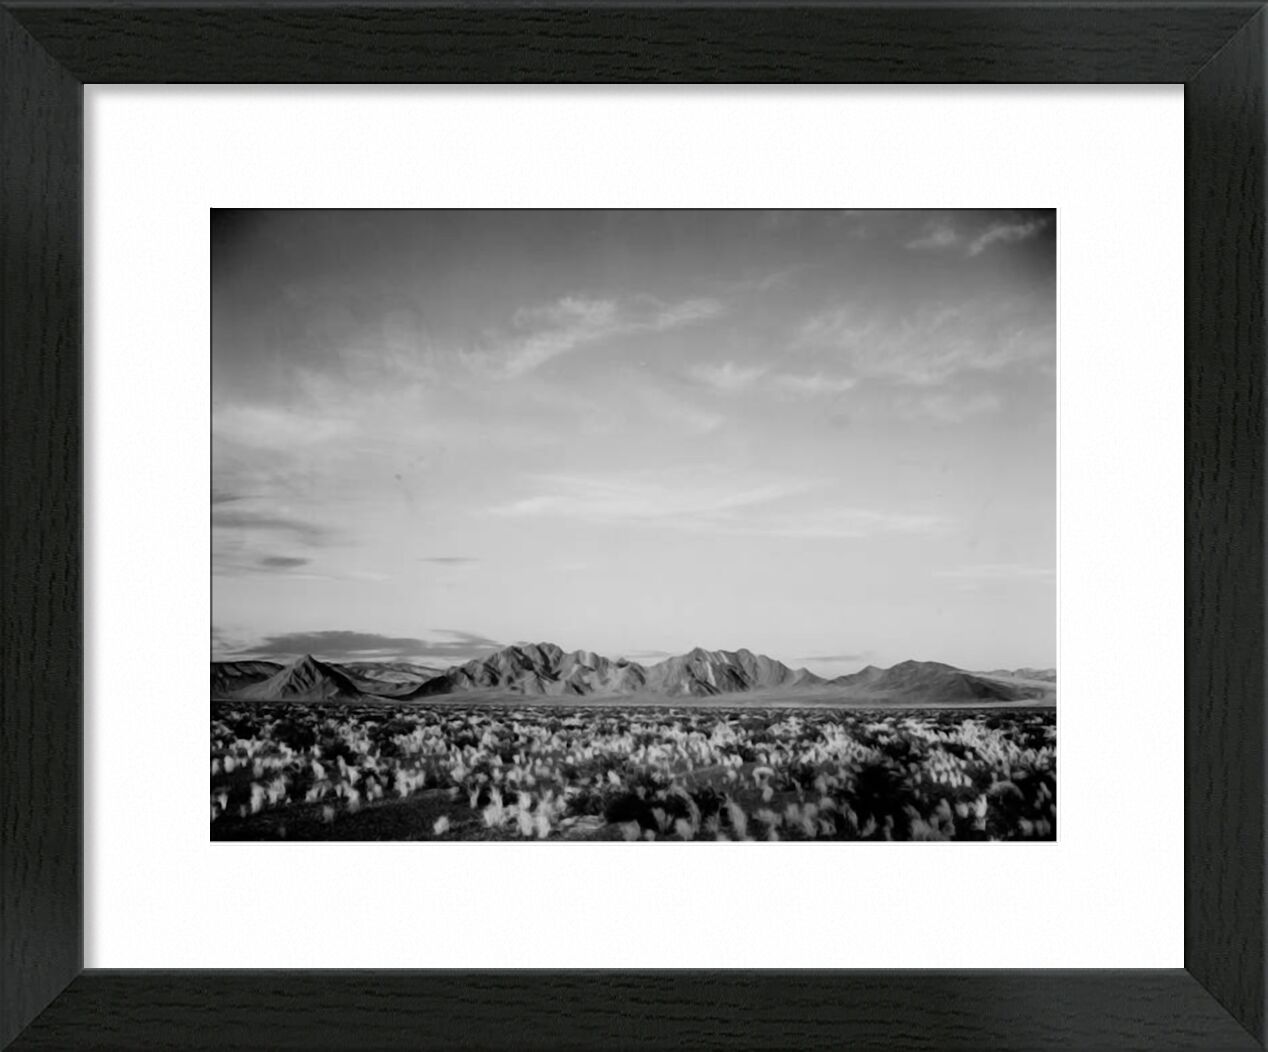 View Of Montains Desert Shrubs Highlighted - Ansel Adams desde Bellas artes, Prodi Art, ANSEL ADAMS, blanco y negro, montañas, arbustos